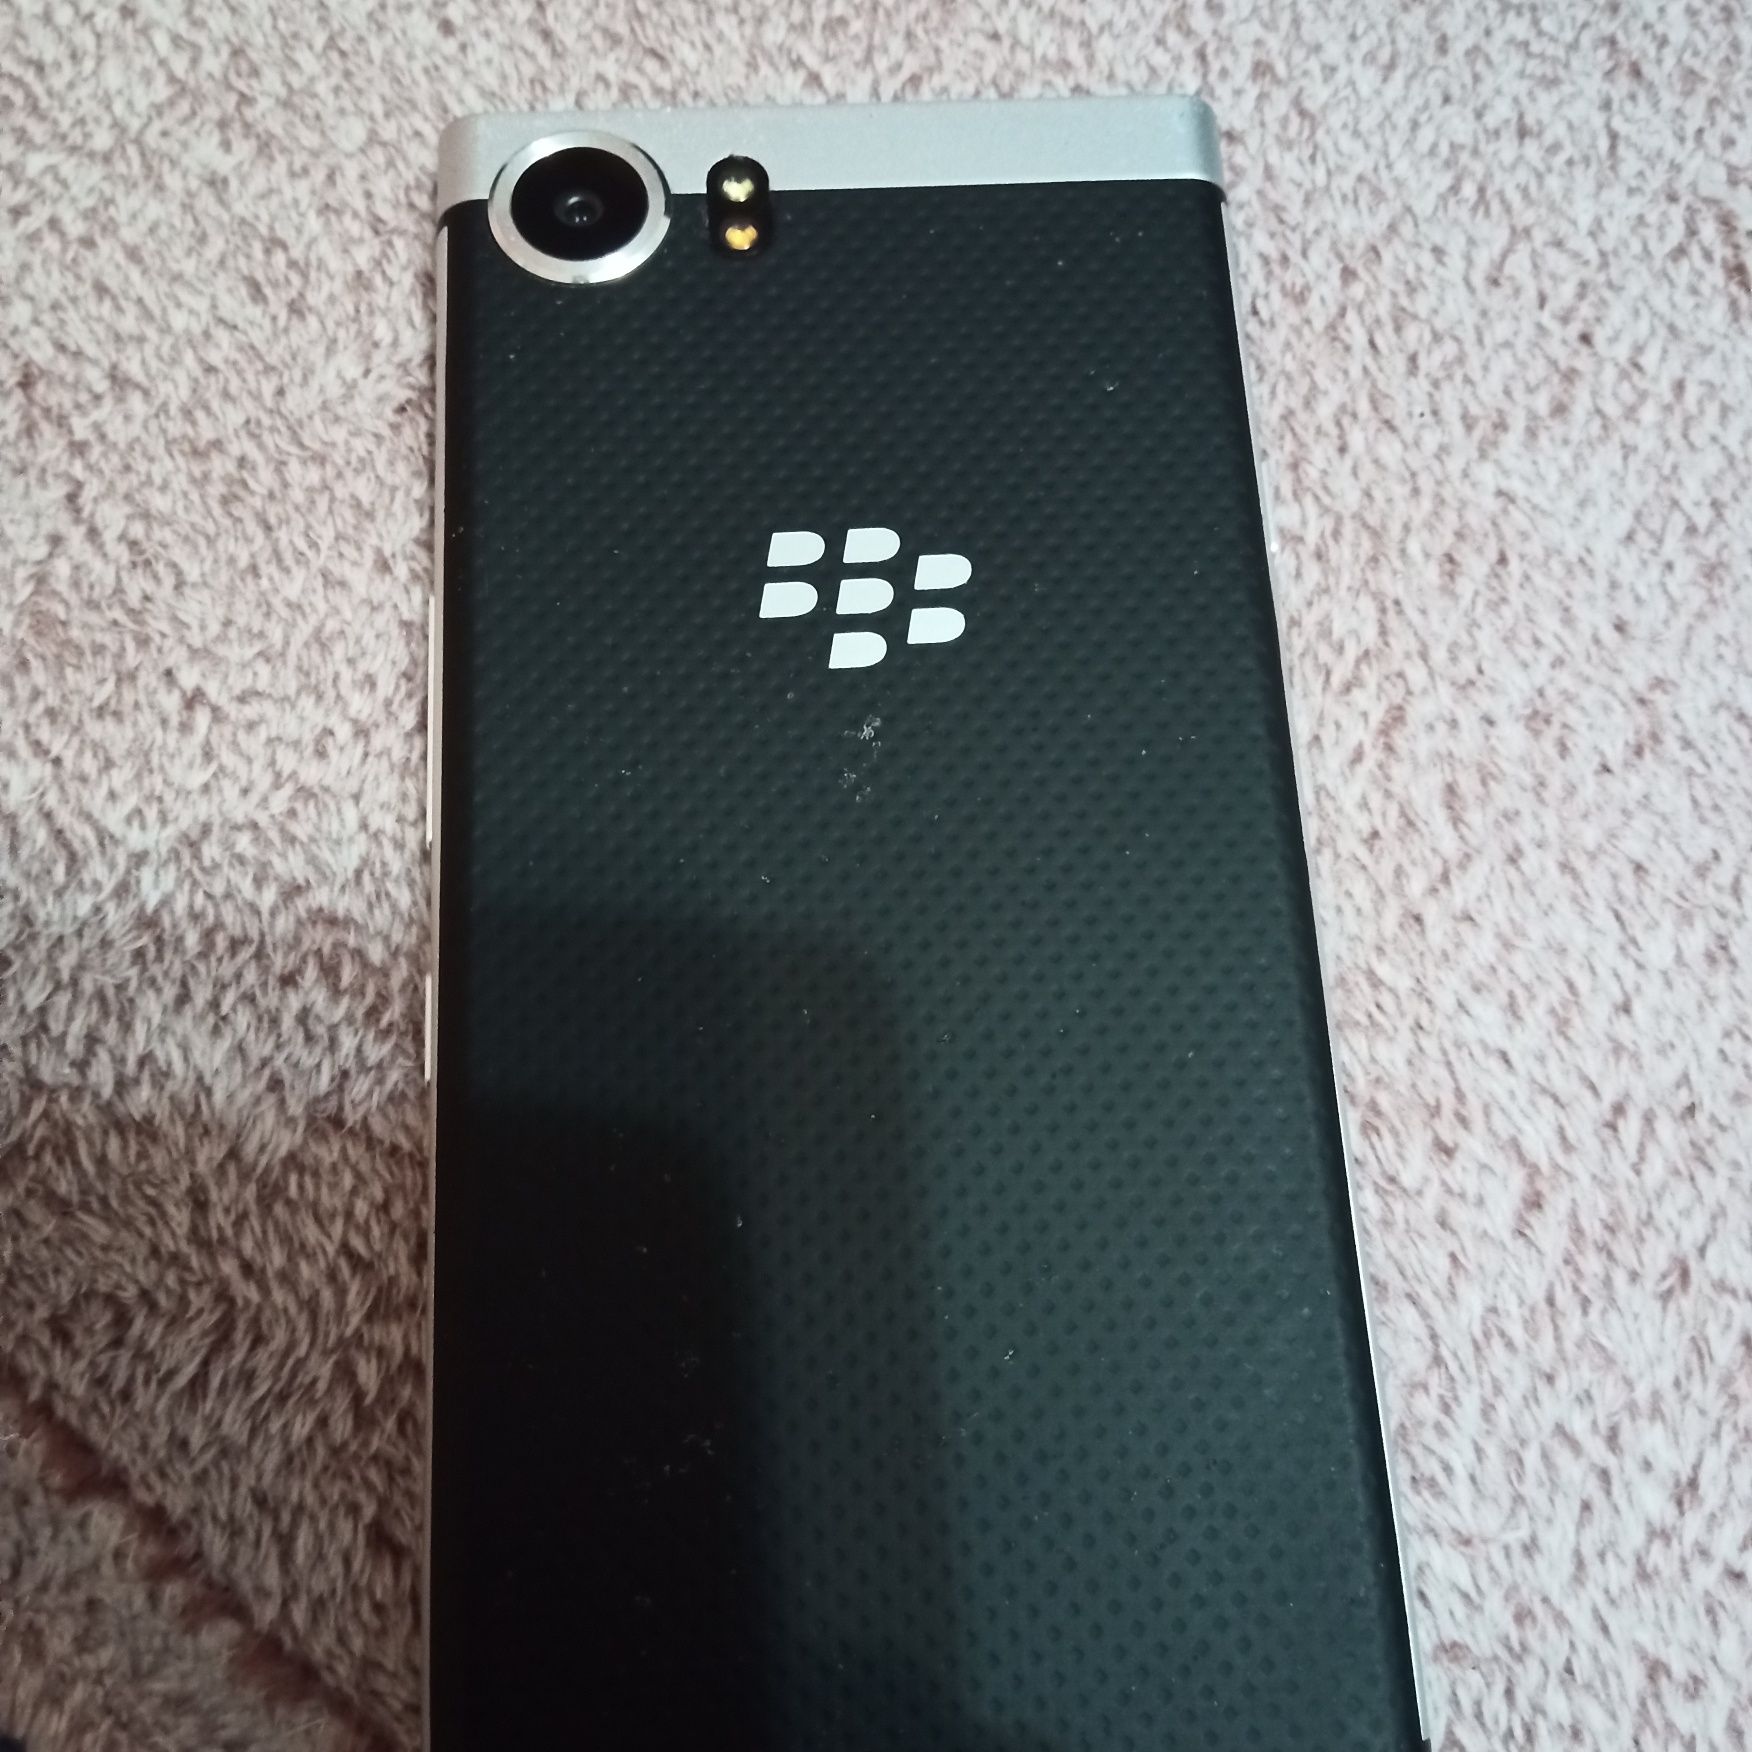 blackberry keyone